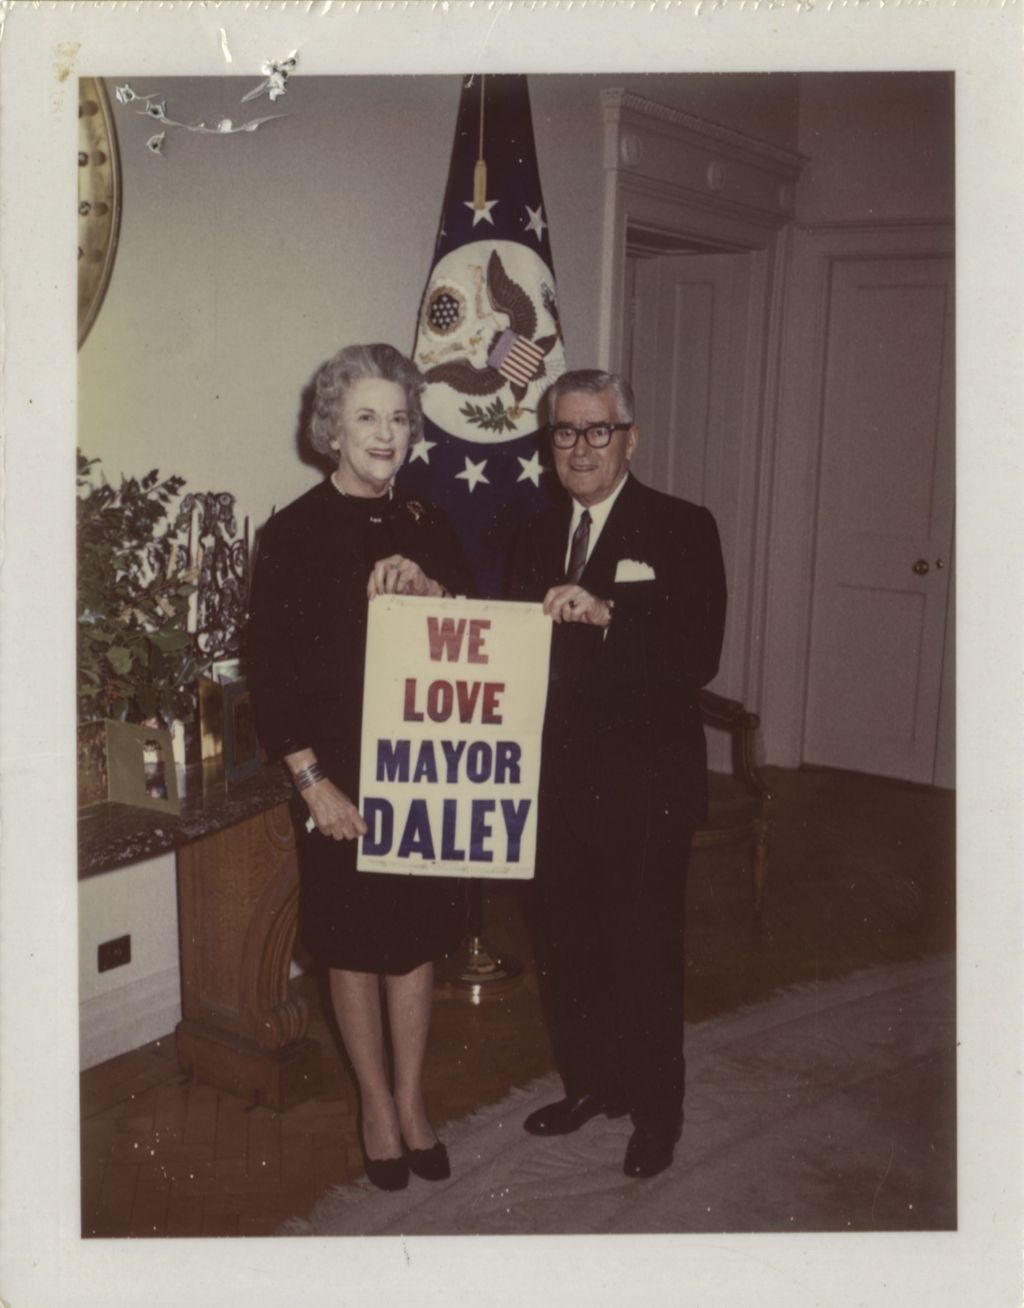 Miniature of Leo J. Sheridan and Bea Sheridan with a "We Love Mayor Daley" poster